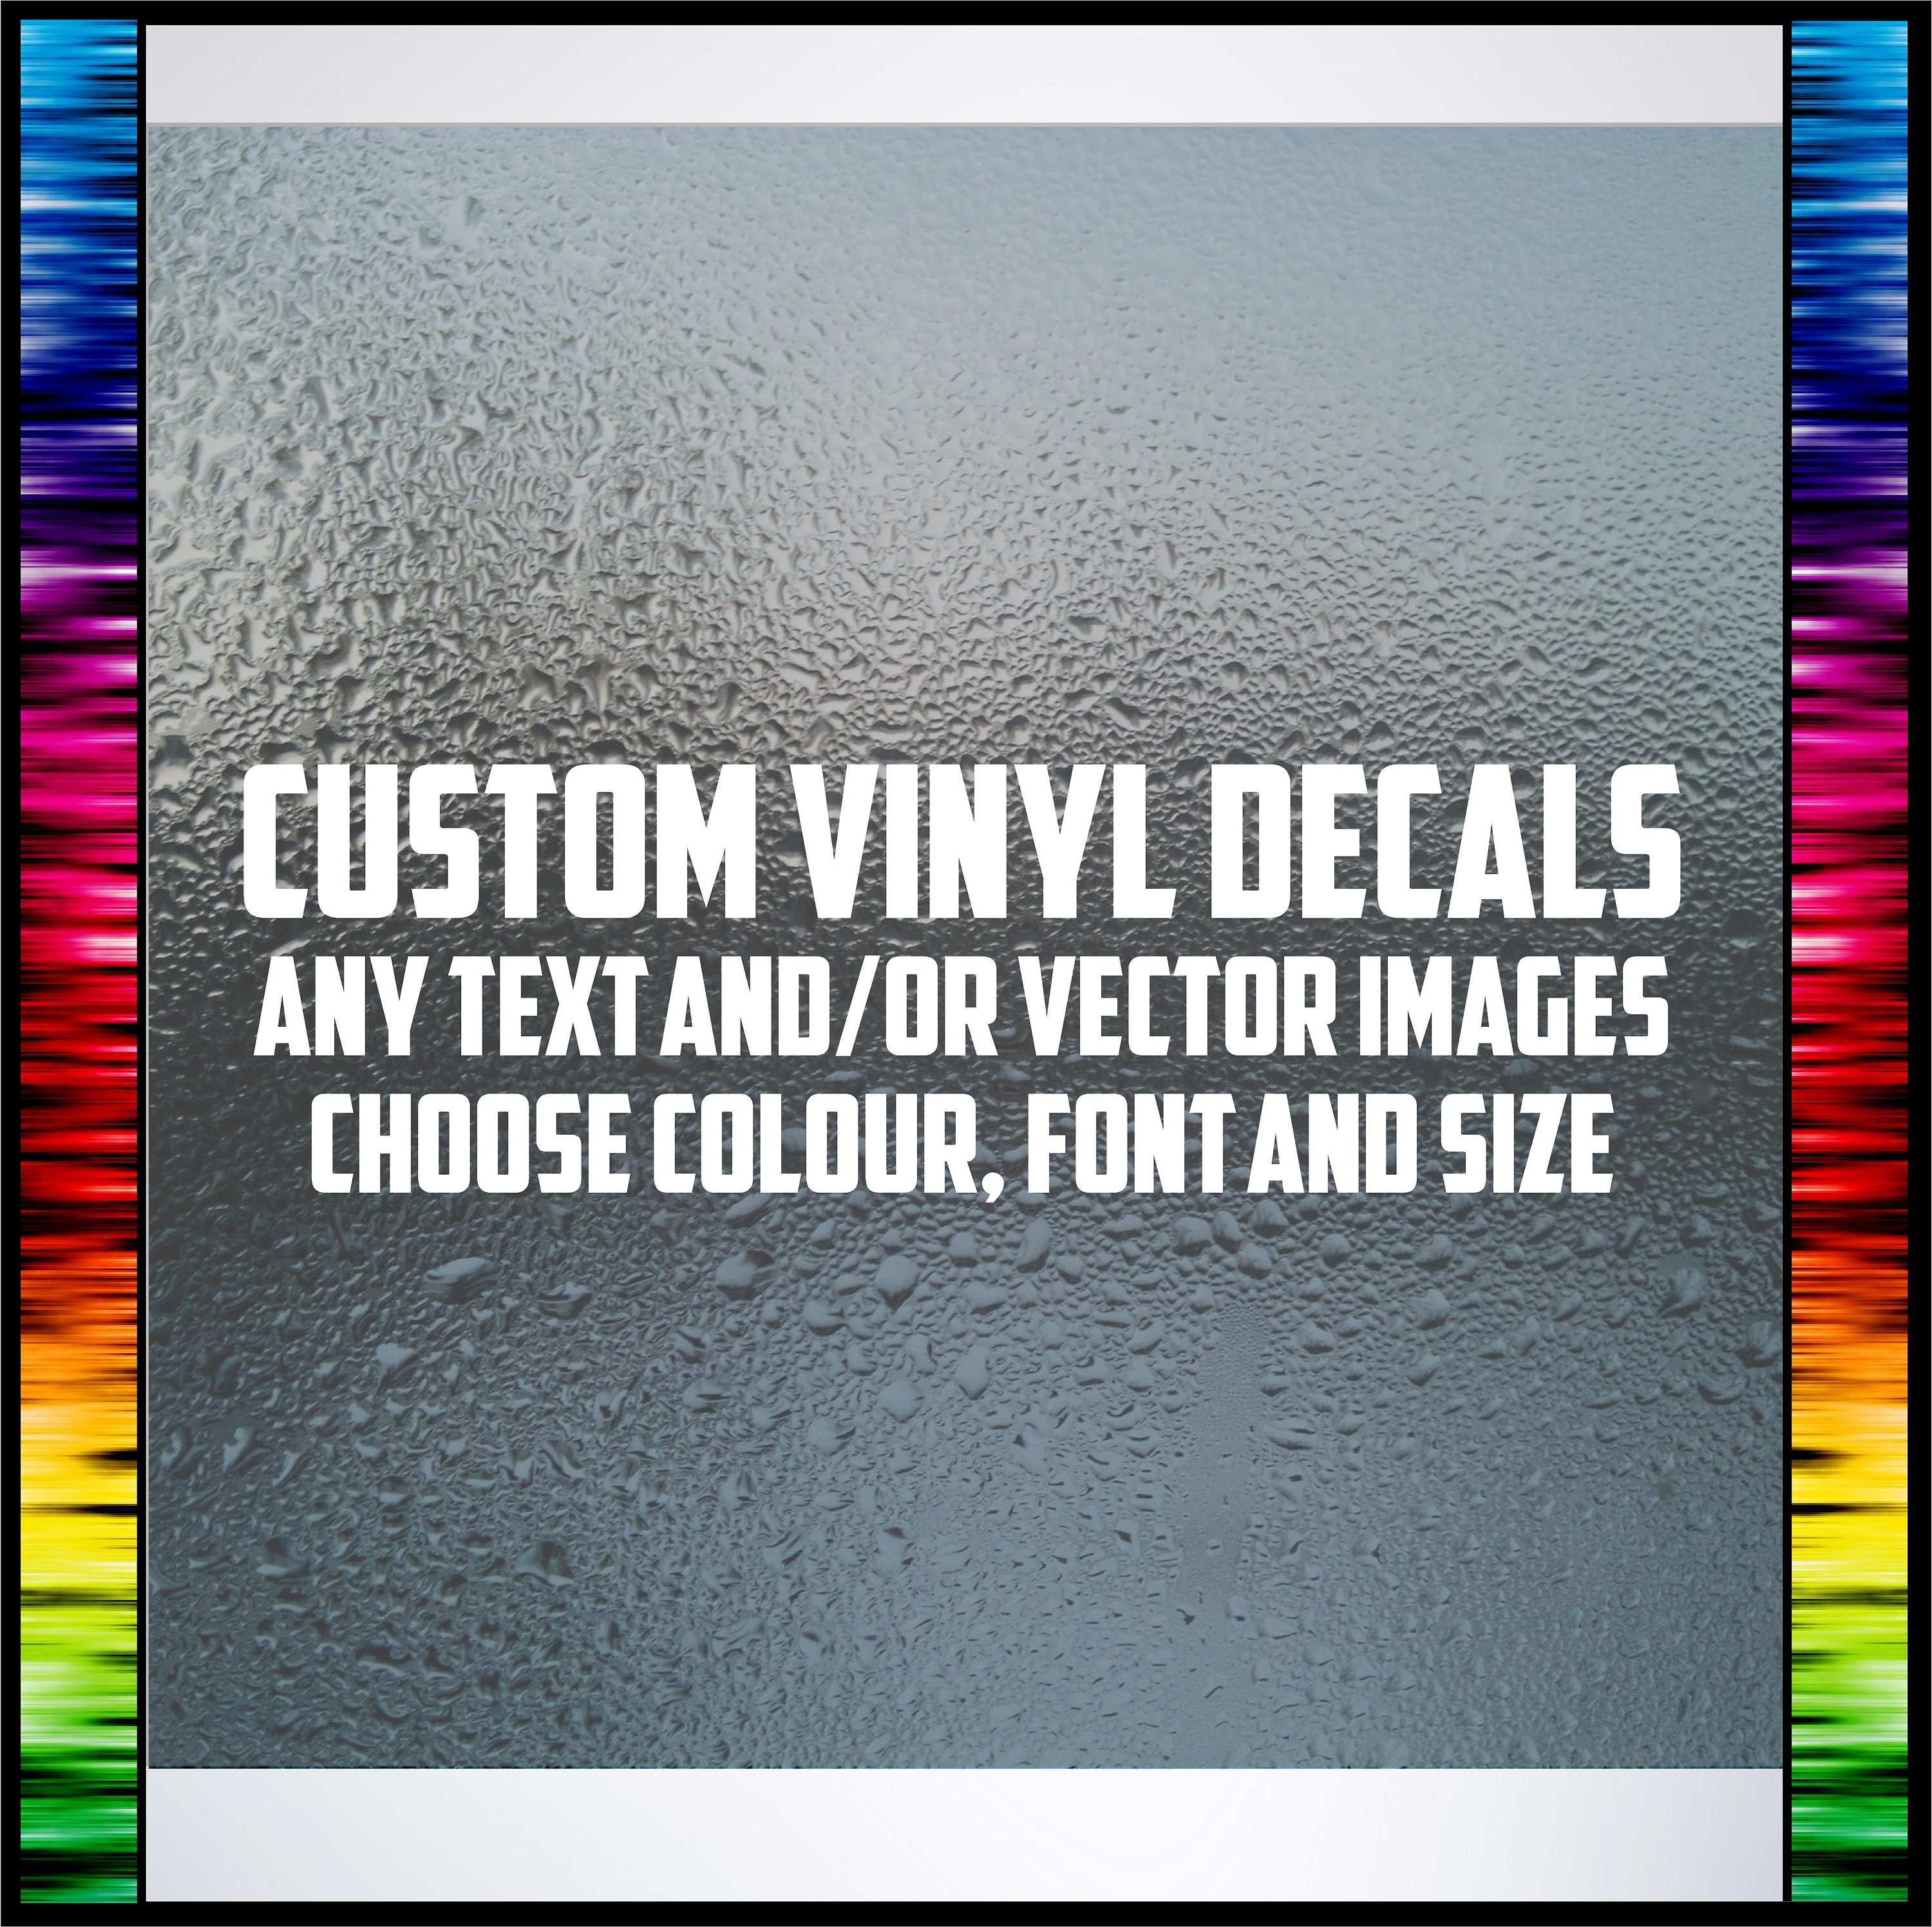  Custom Vinyl Decals - Any Text